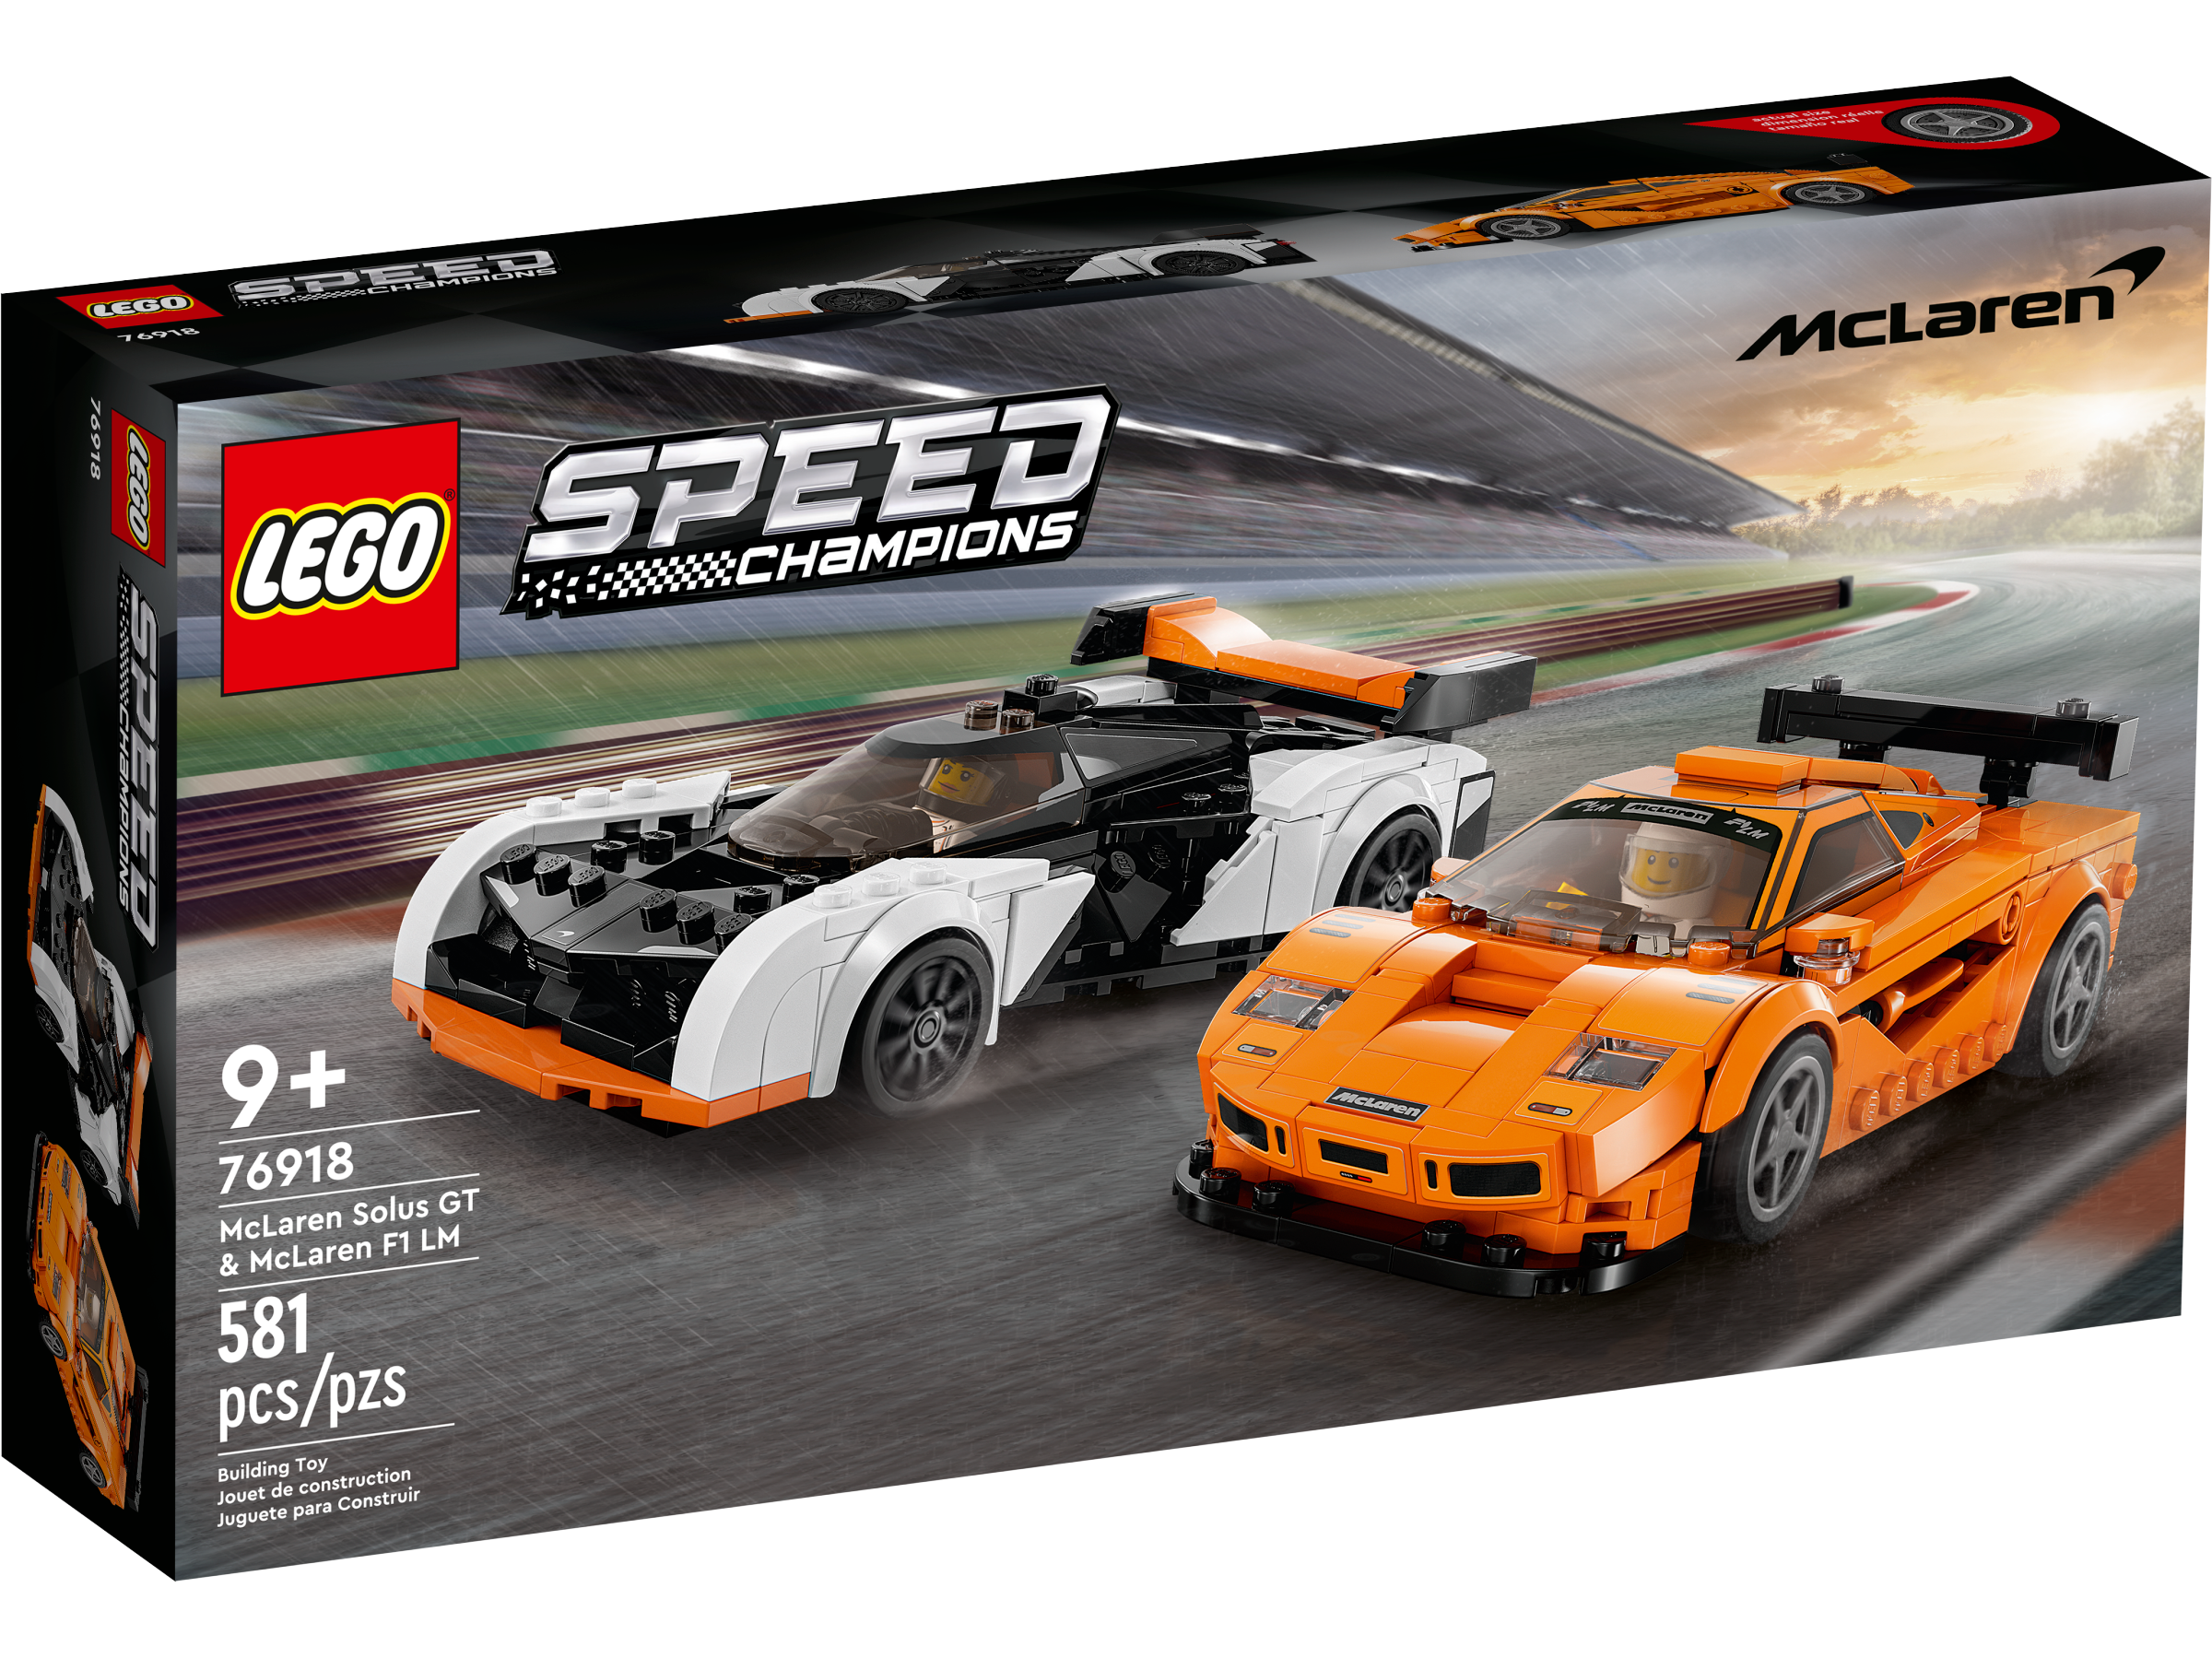 LEGO's McLaren Formula 1 car gets price cut for Black Friday sale